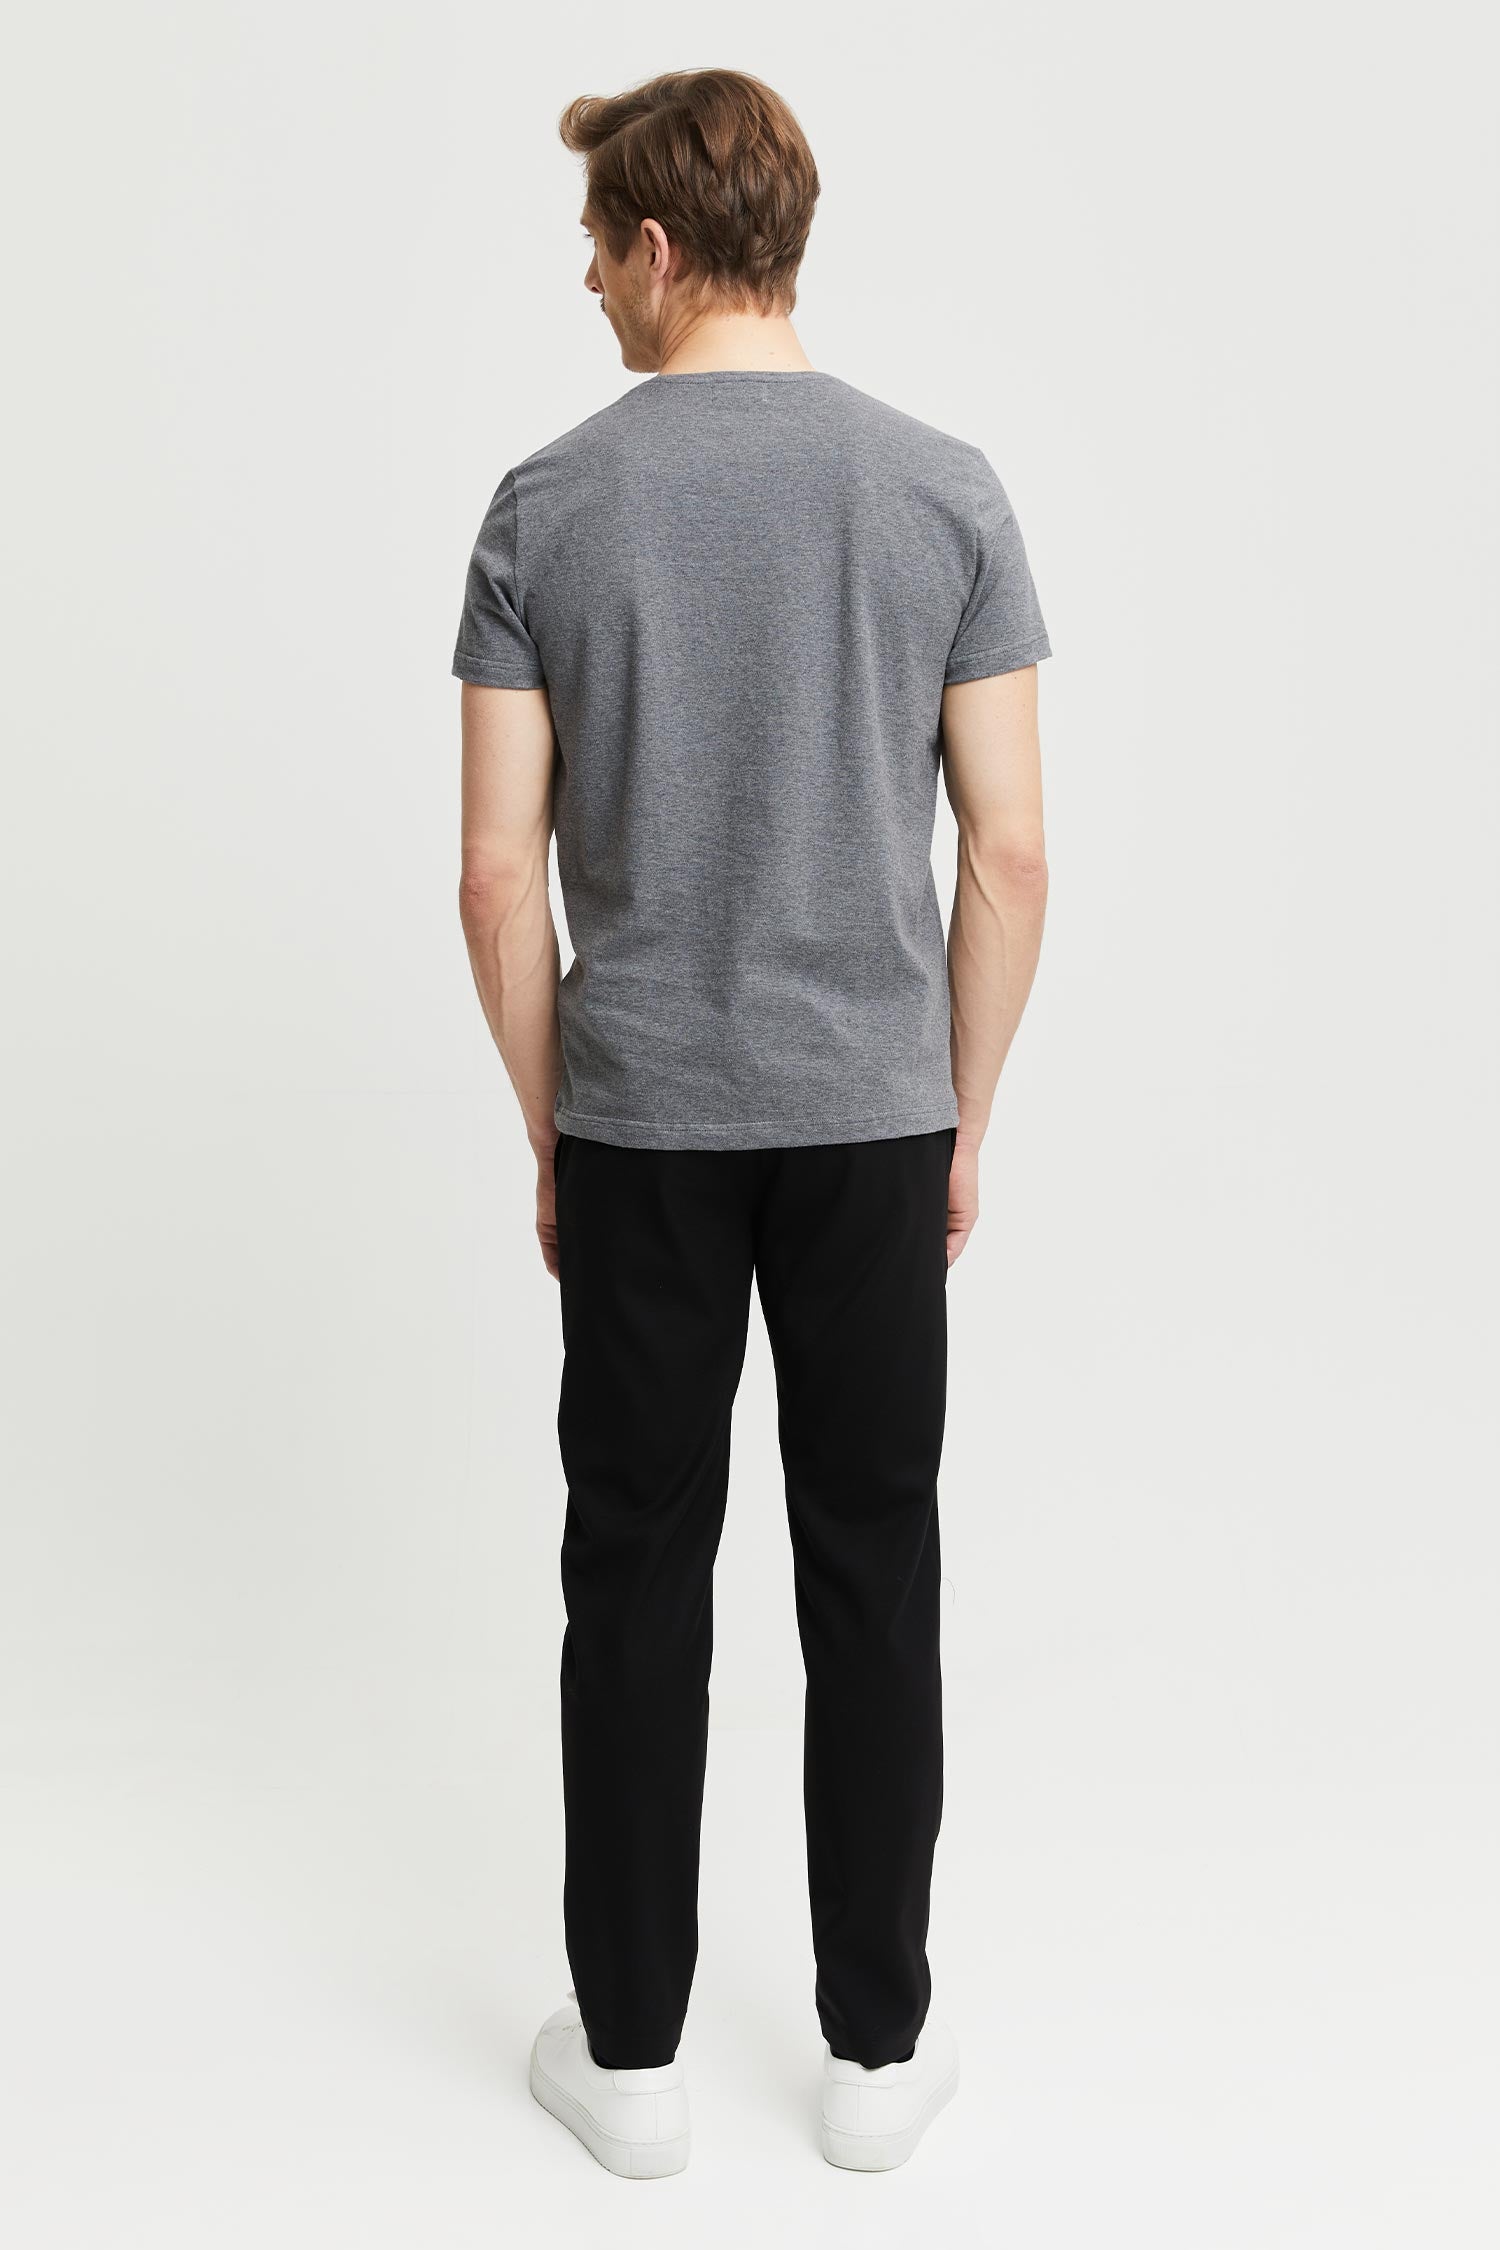 Frenn Henri sustainable premium quality GOTS organic cotton t-shirt grey